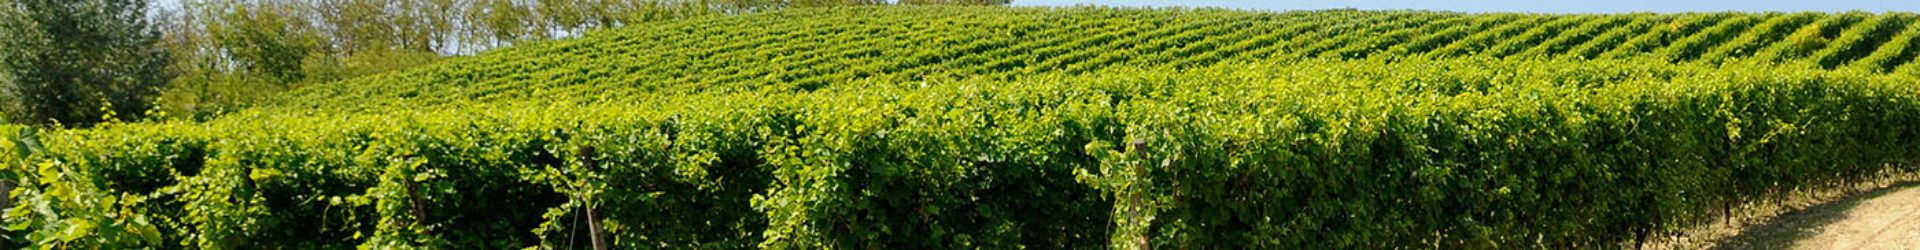 Piedmont Land of Great wines